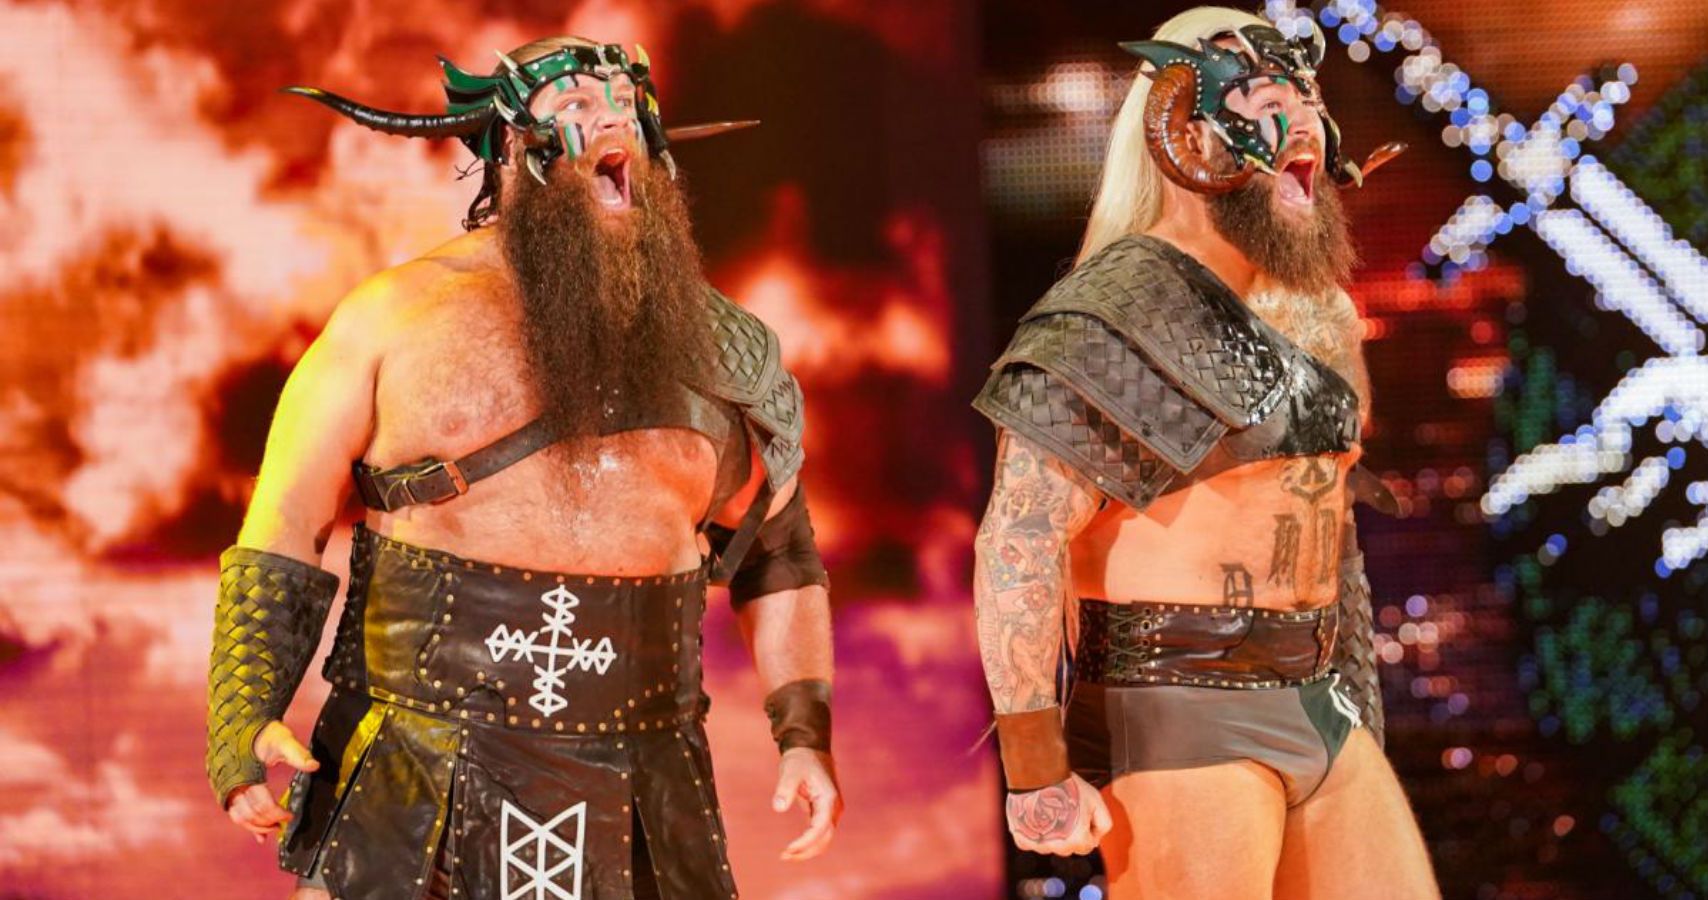 Viking Raiders return to action on WWE Raw